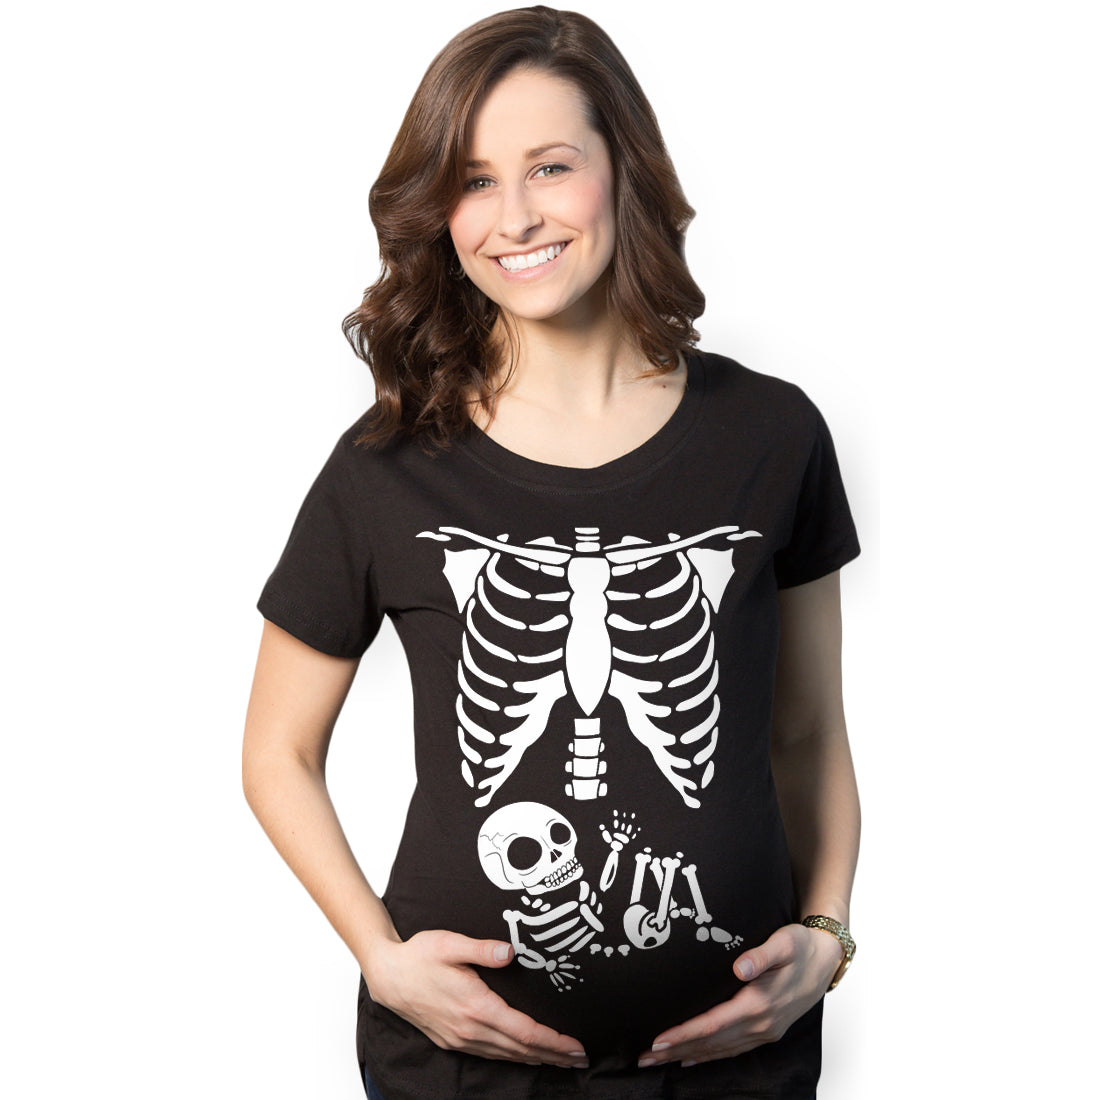 Funny White Skeleton Rib Cage Maternity T Shirt Nerdy Halloween Tee